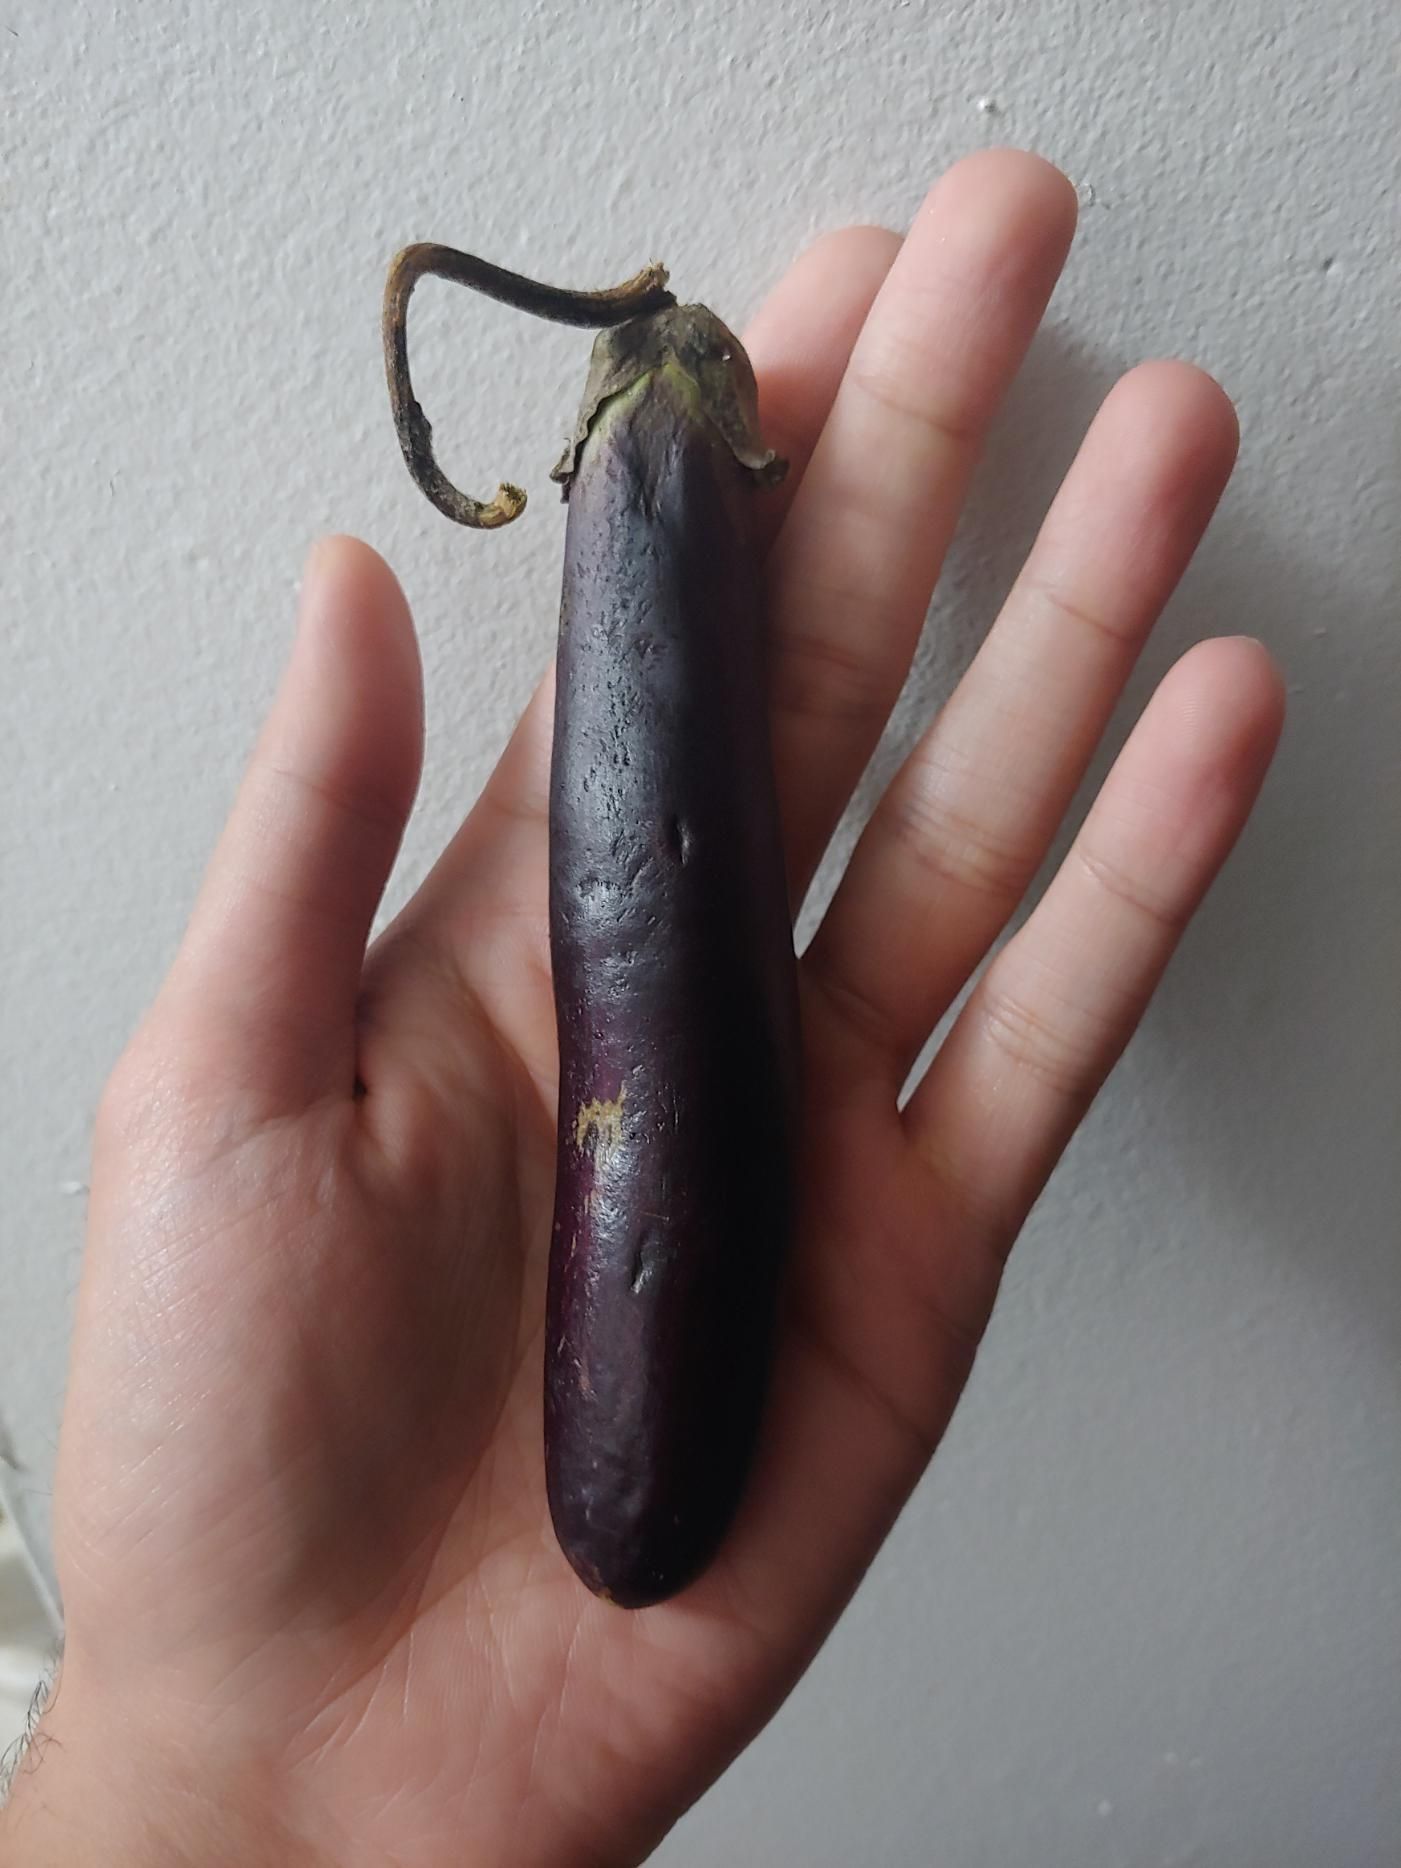 Finally an eggplant representative of the average man